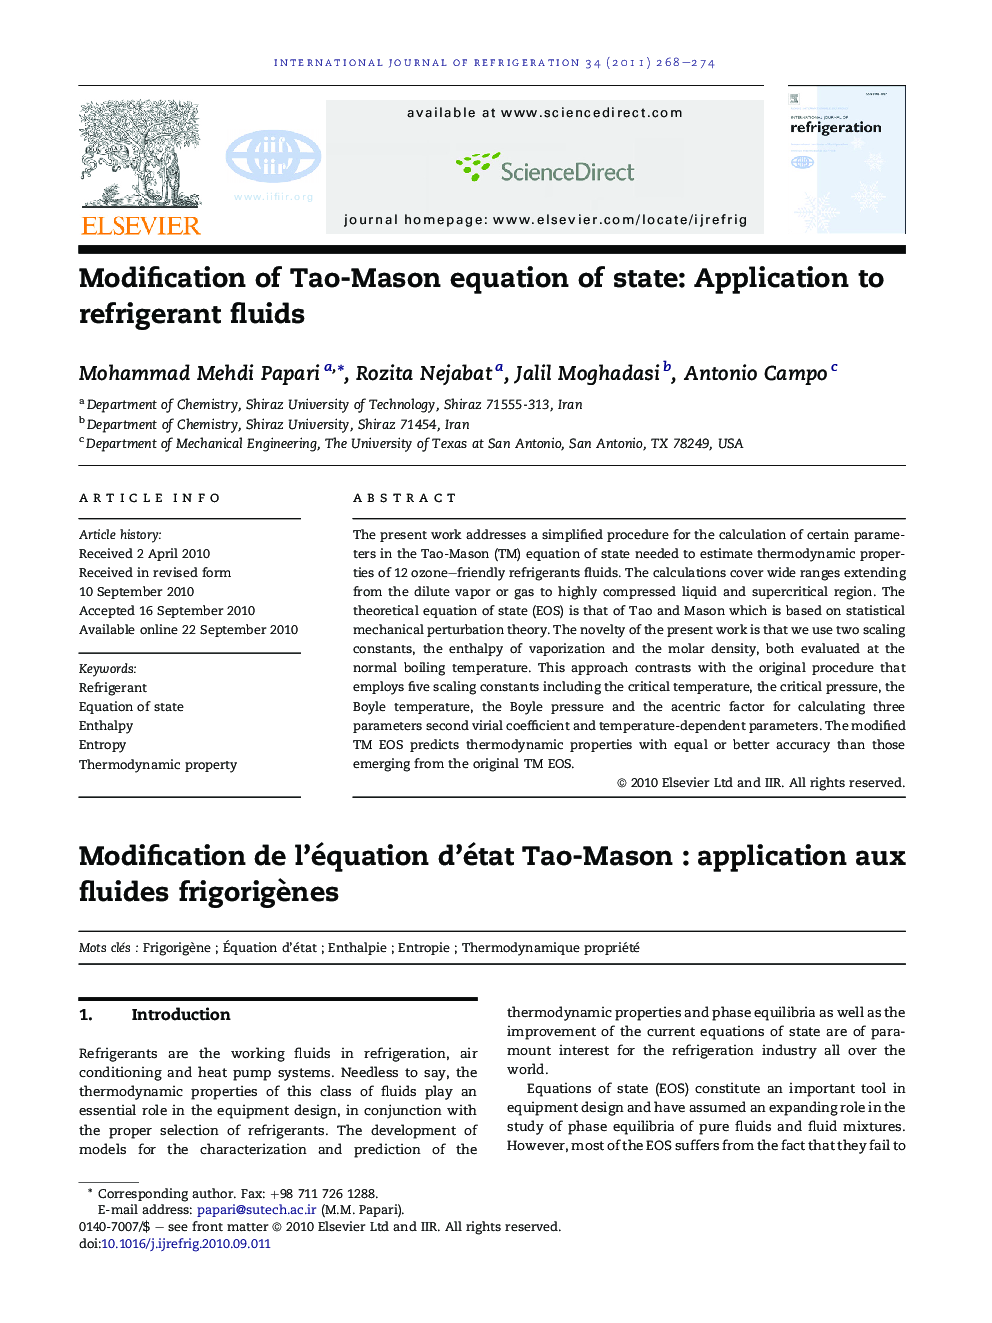 Modification of Tao-Mason equation of state: Application to refrigerant fluids